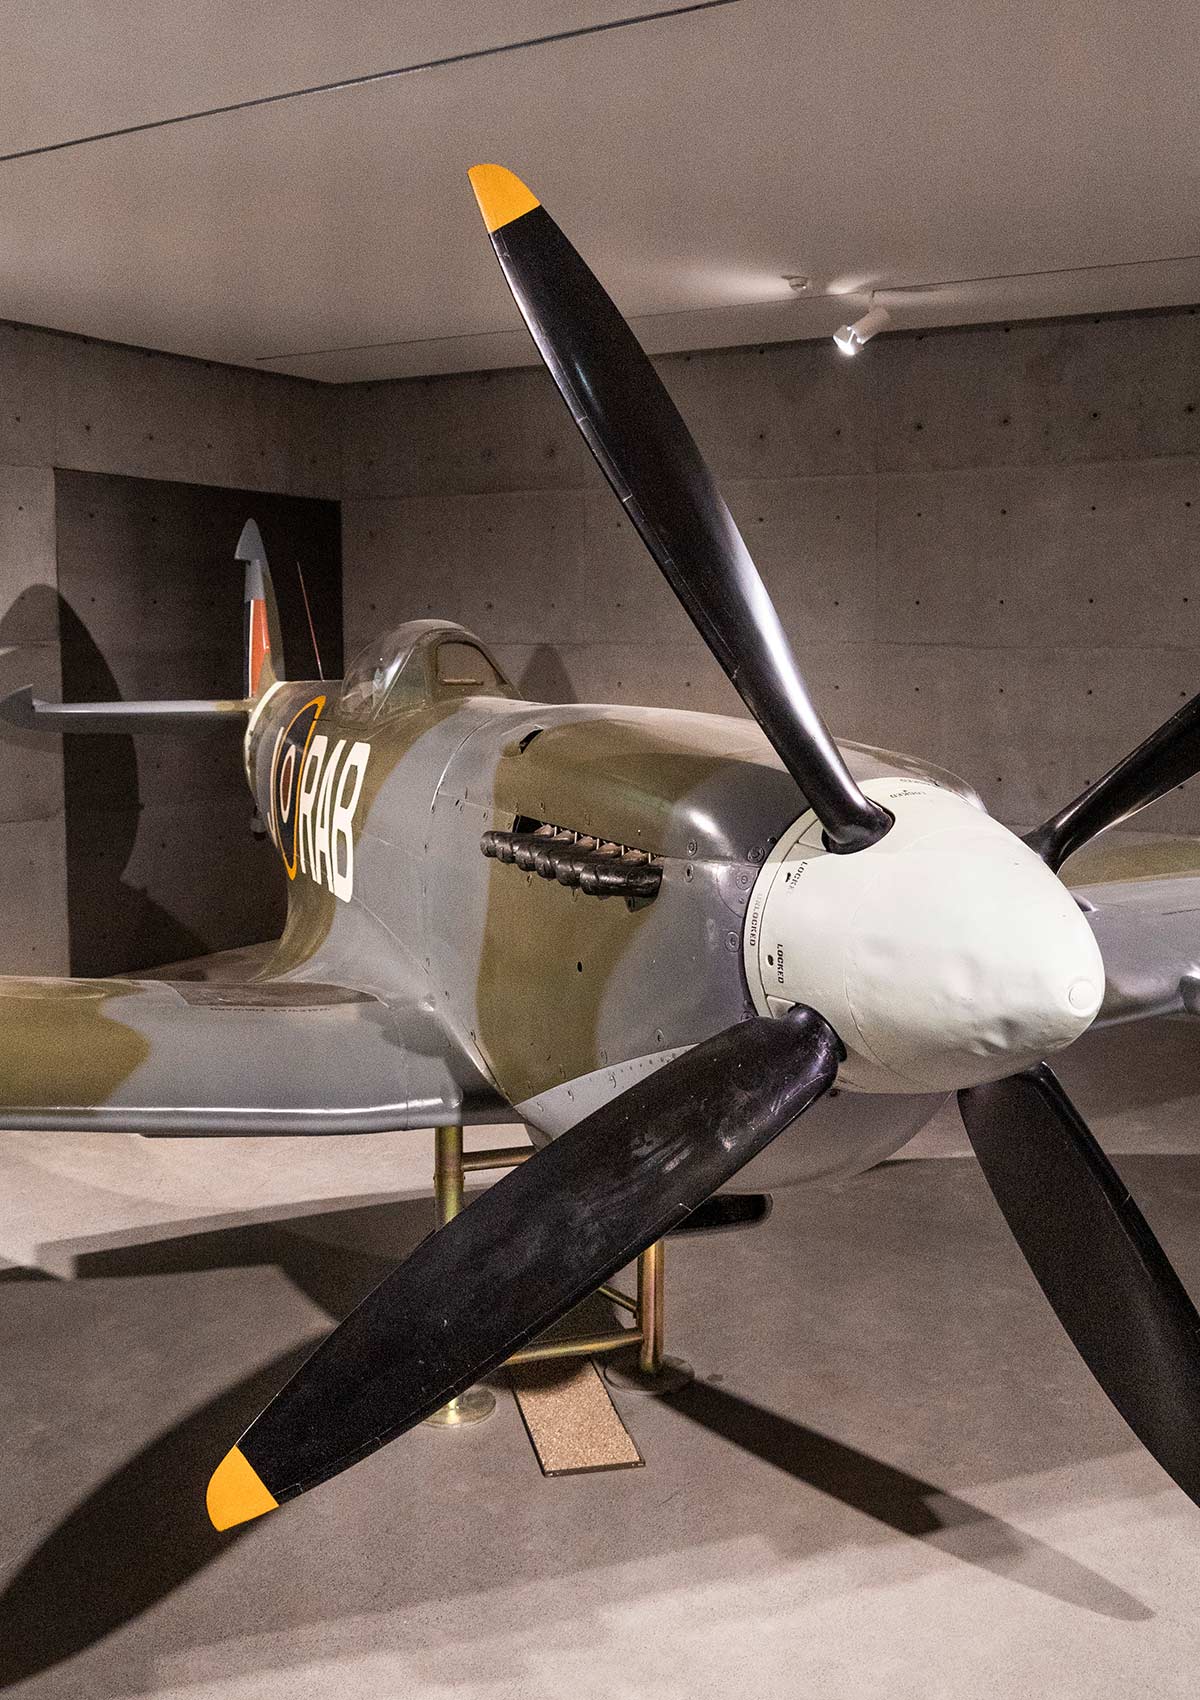 Avion Spitfire, Musée de Auckland, Auckland, Nouvelle-Zélande / Spitfire Airplane, Auckland Museum, New Zealand